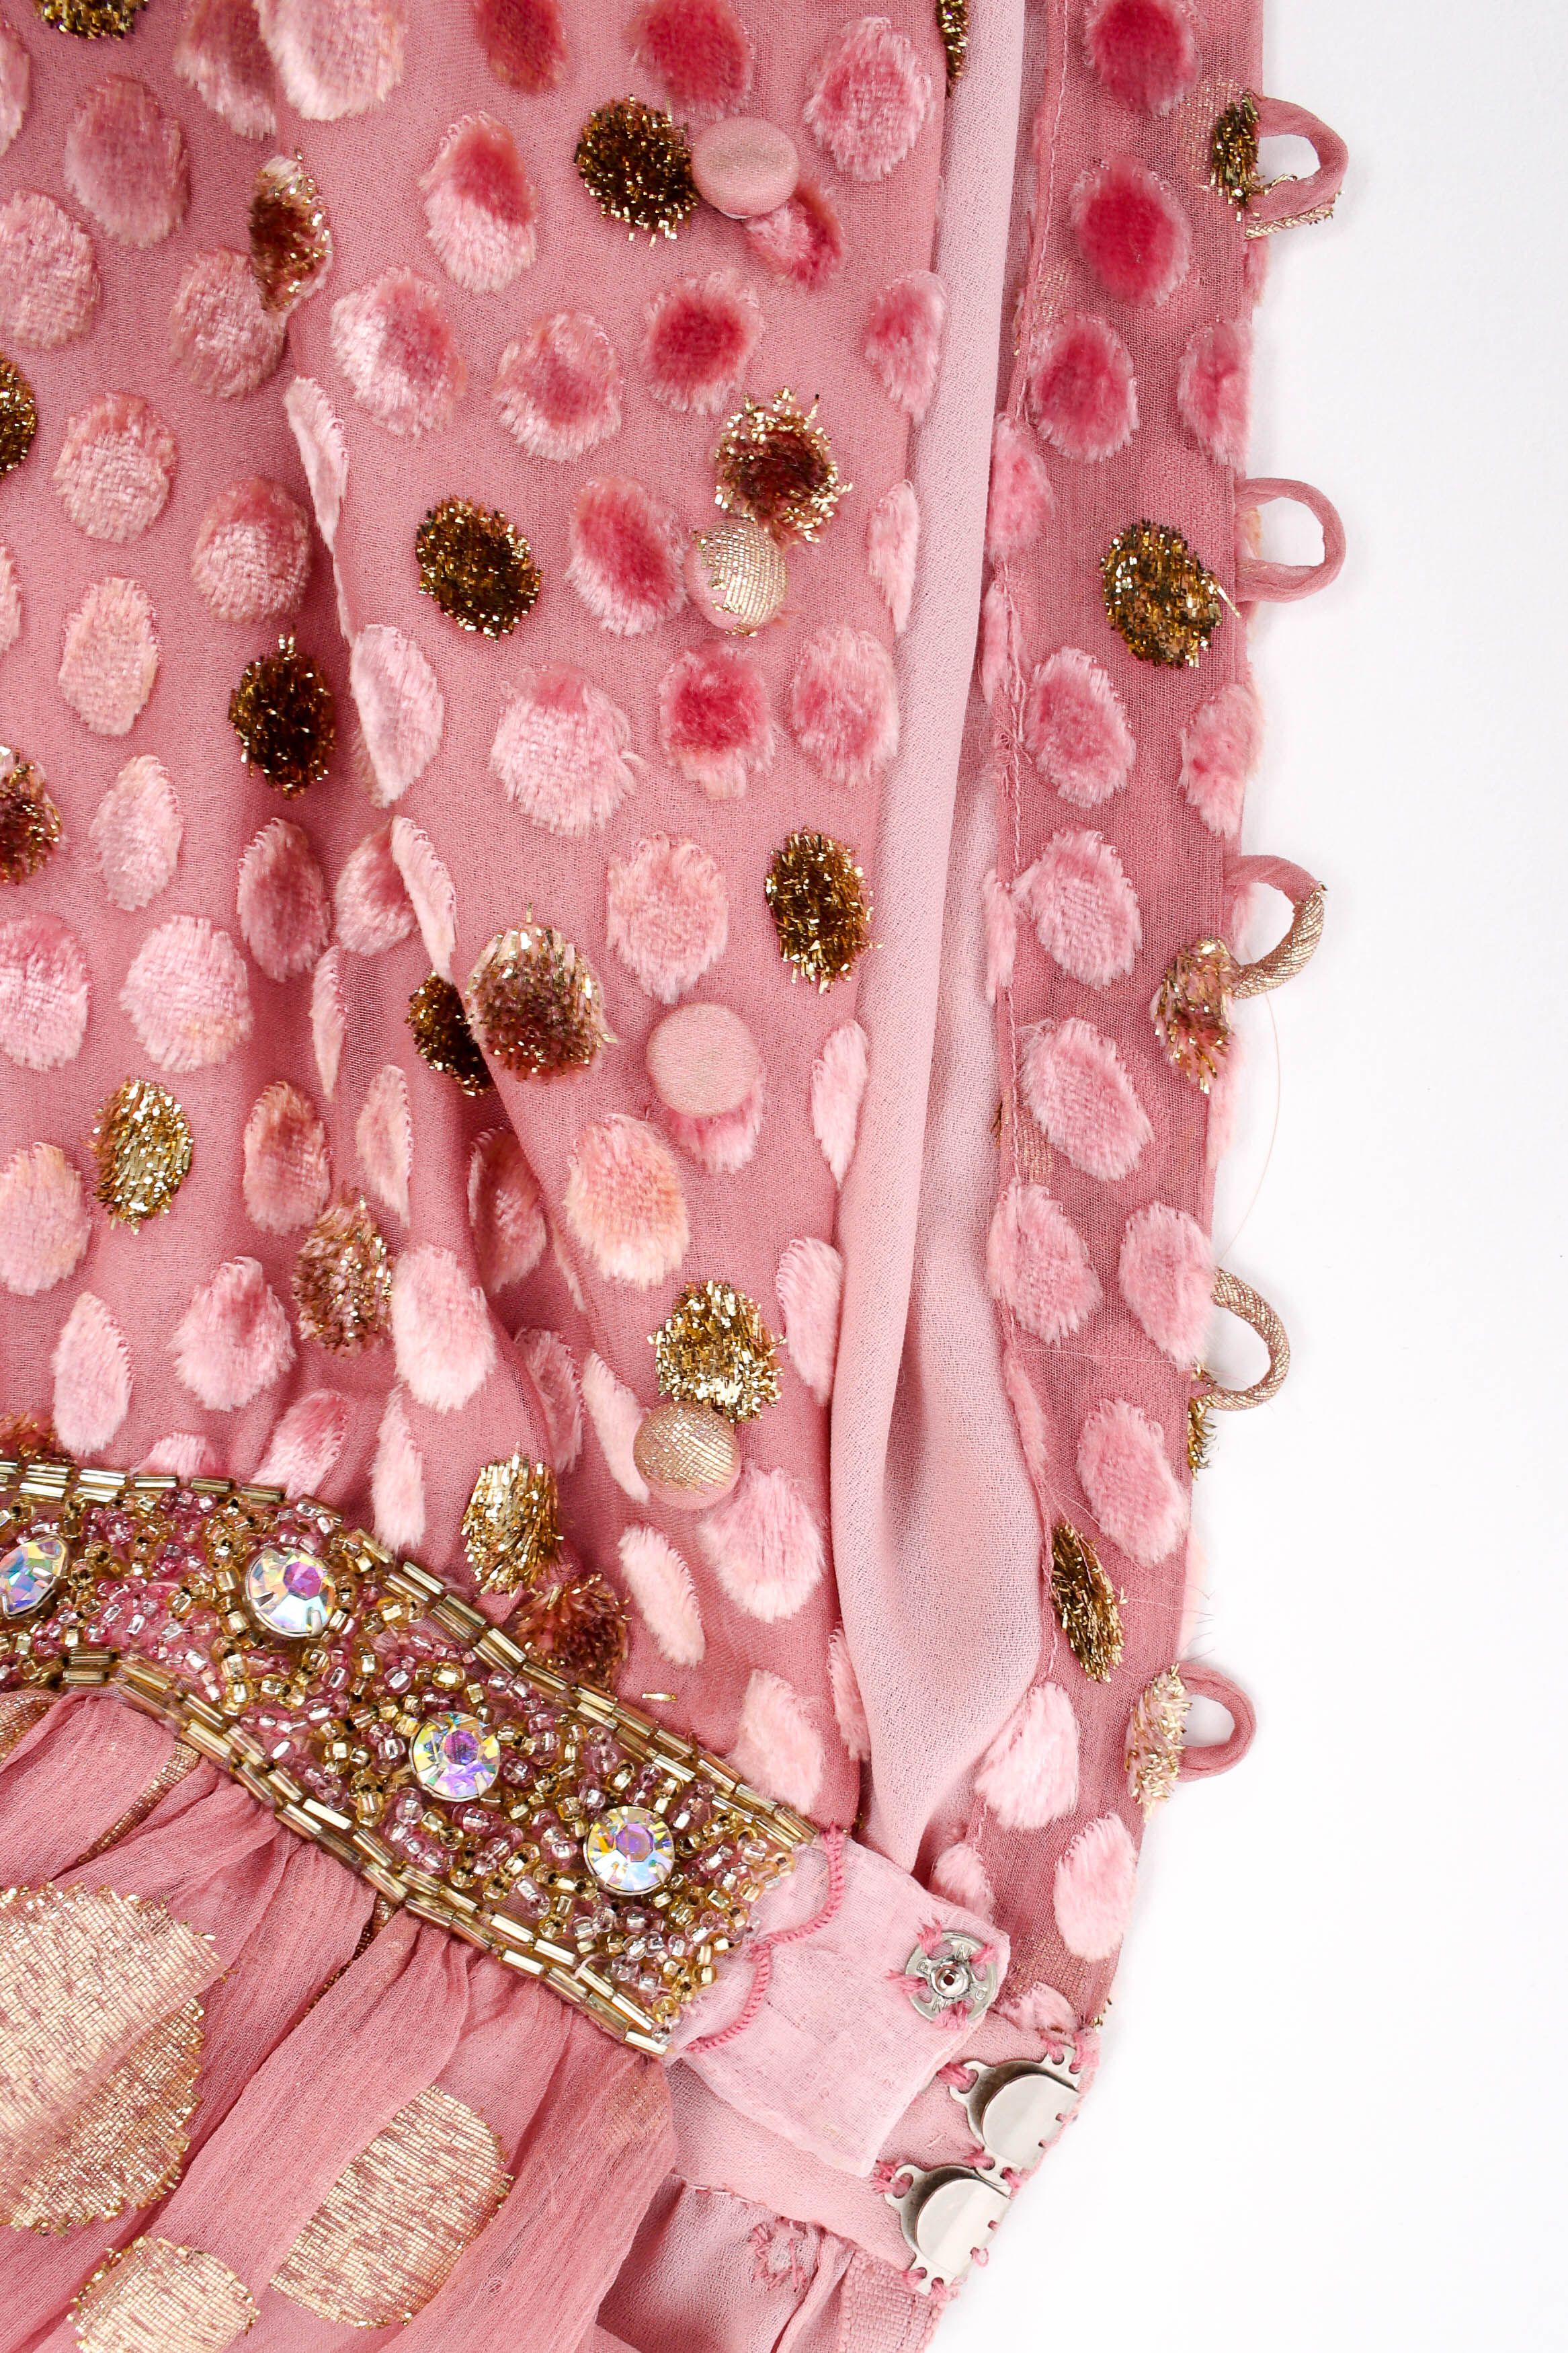 Vintage Adele Simpson Beaded Textured Dot Dress rouleau loops button closure @ Recess LA